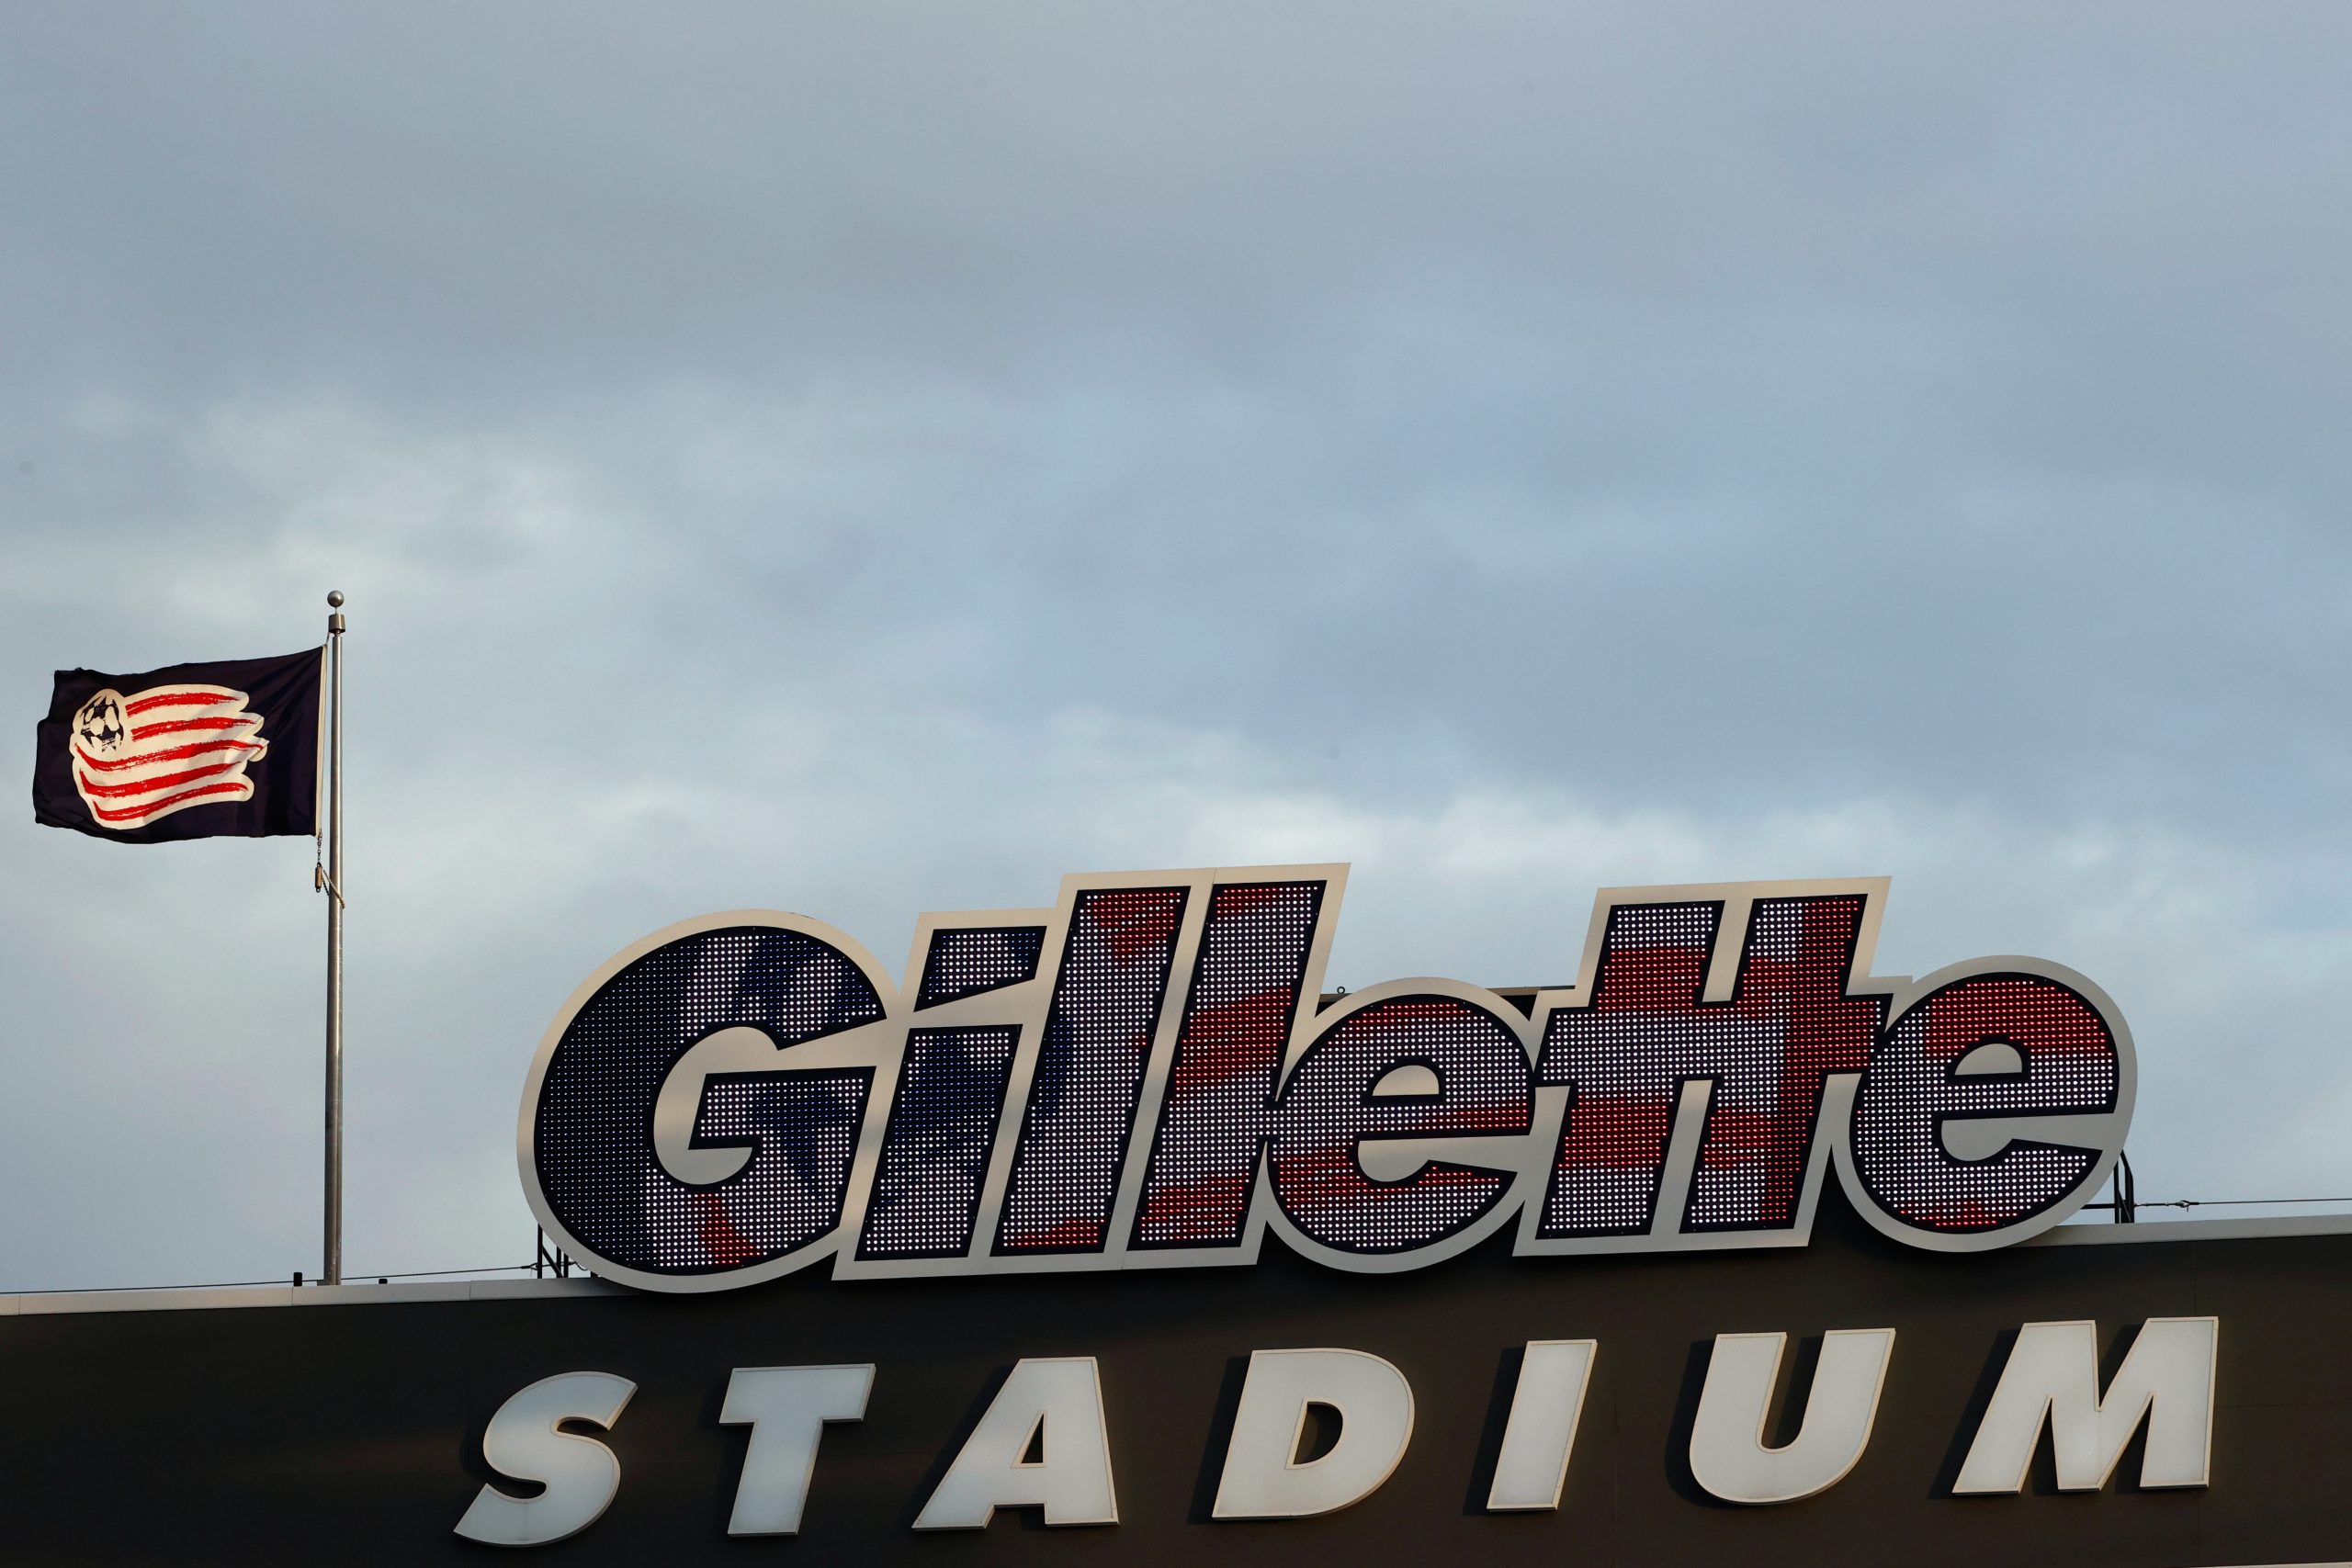 Gillette Stadium, home of the New England Revolution